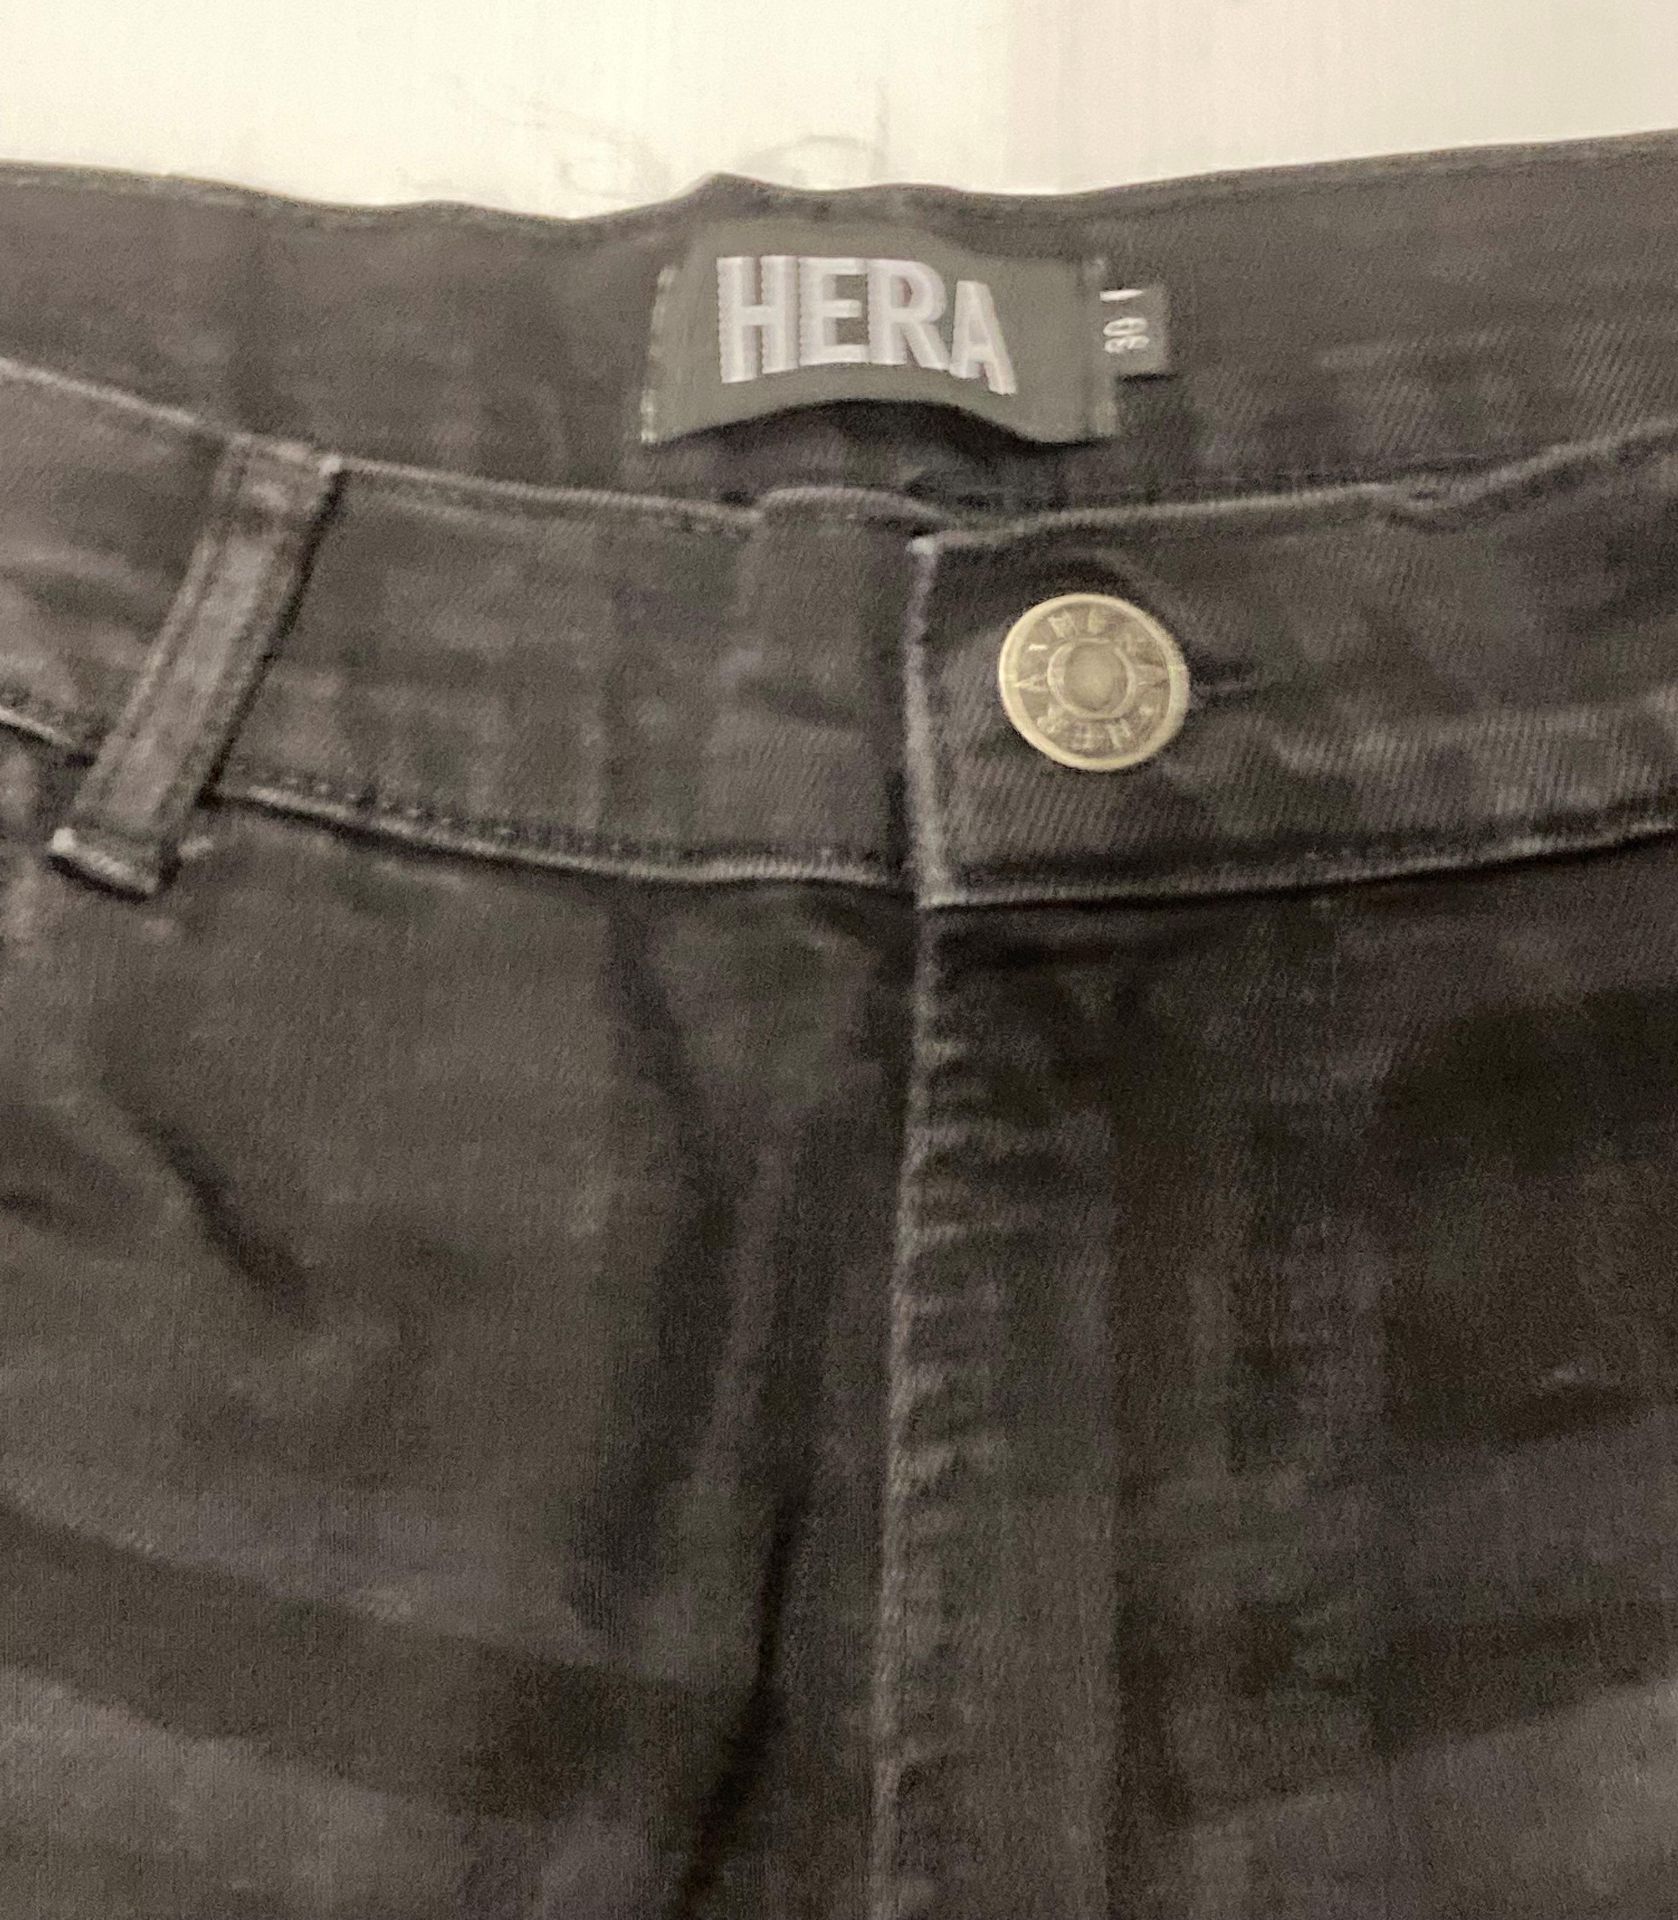 5 x items - 4 x Hera blue denim shorts (size 30) and 1 x Hera black denim shorts (size 28) - Image 4 of 4